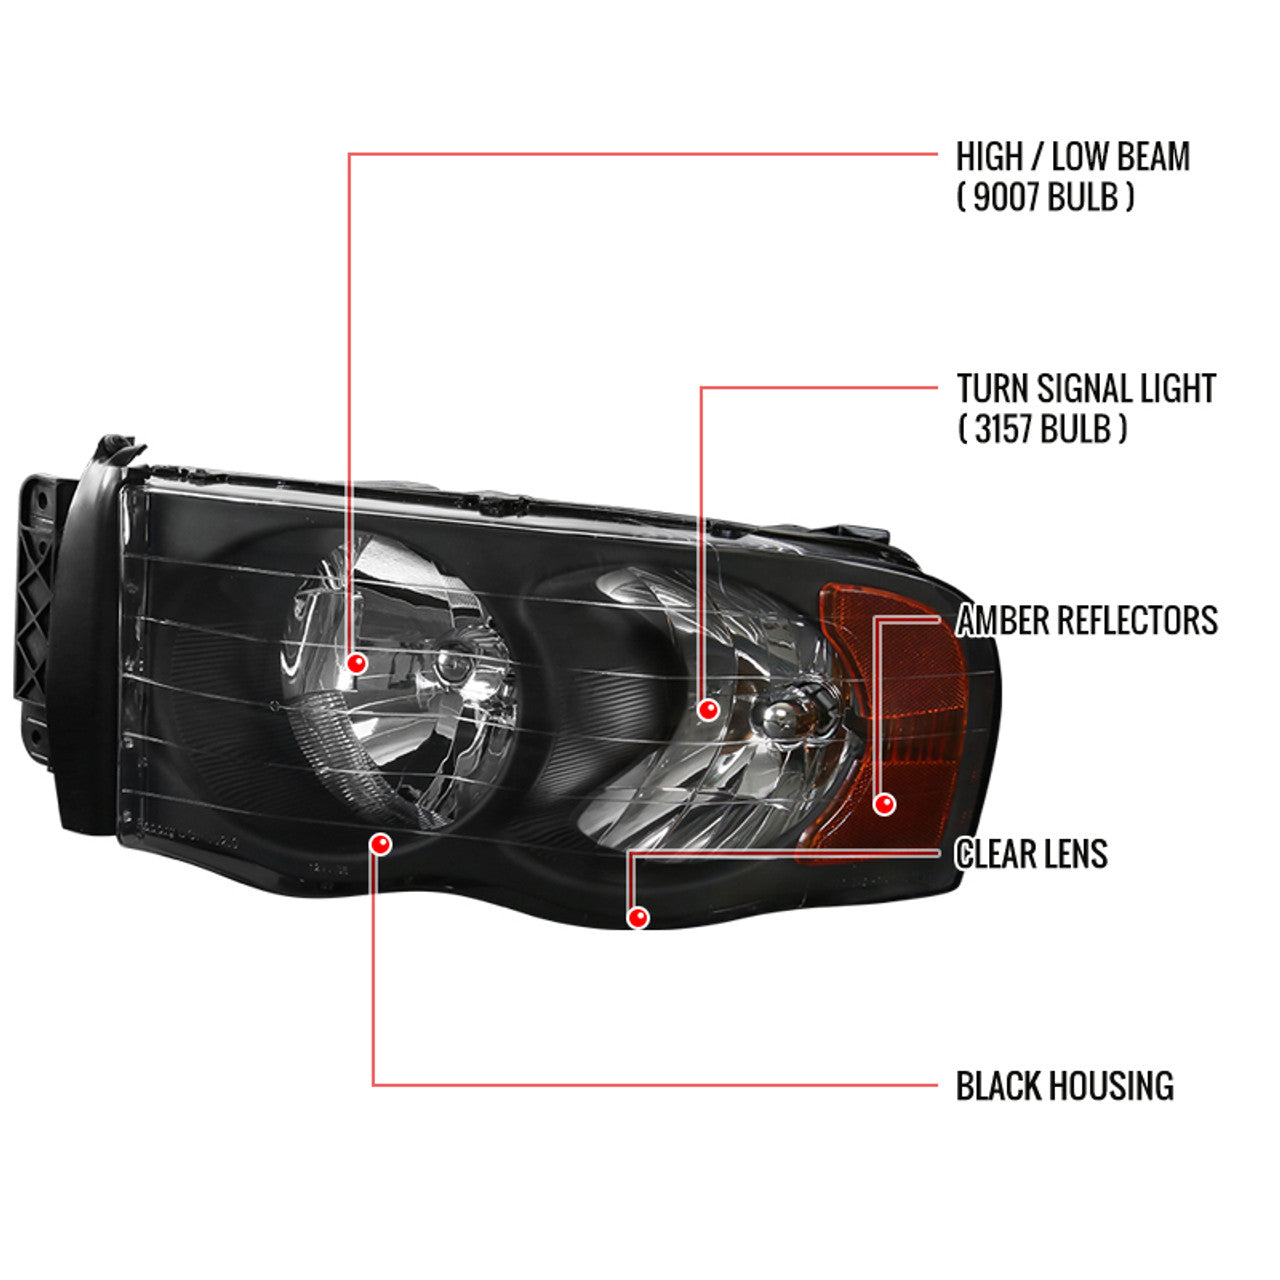 Spec D Euro Head Lights (Black): Dodge Ram 2002 - 2005